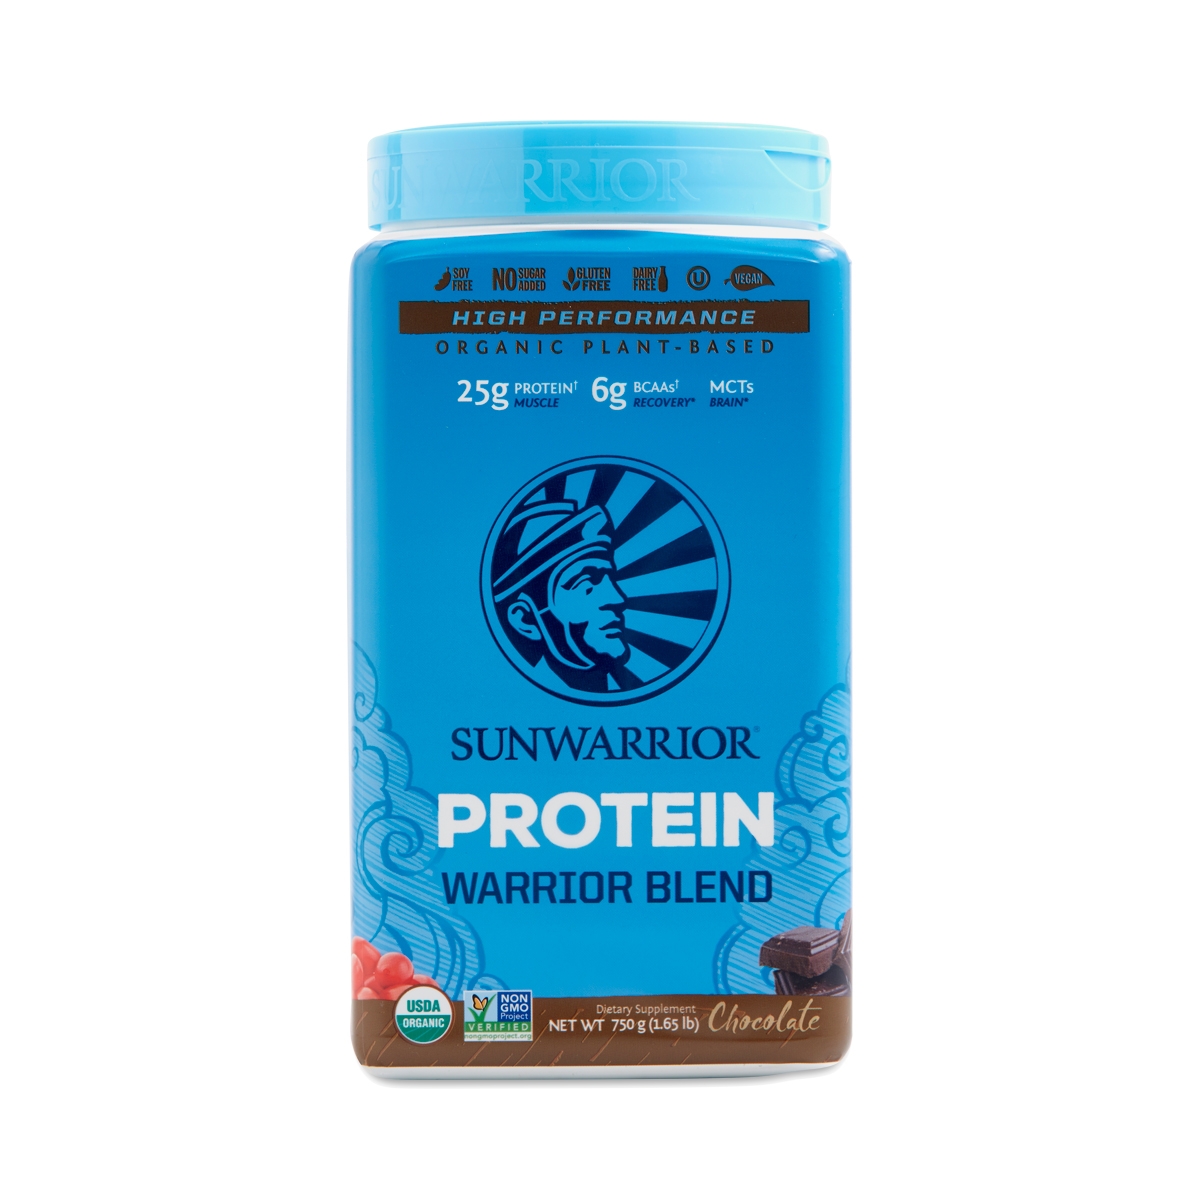 Sunwarrior Warrior Chocolate Protein Blend 1.65 lb container